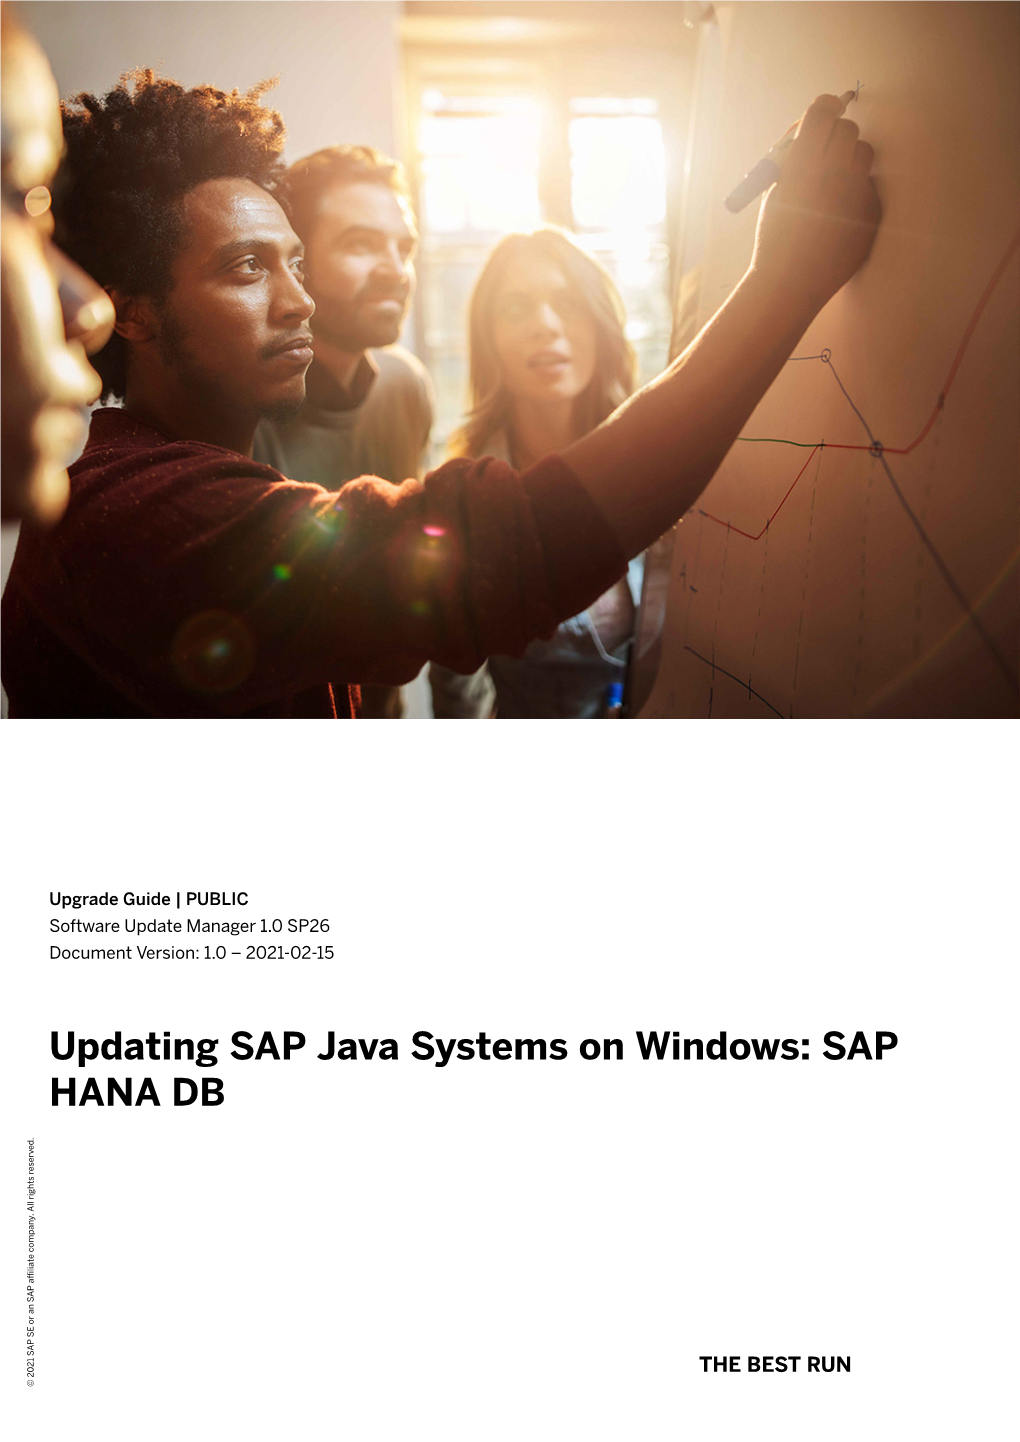 Updating SAP Java Systems on Windows: SAP HANA DB Company